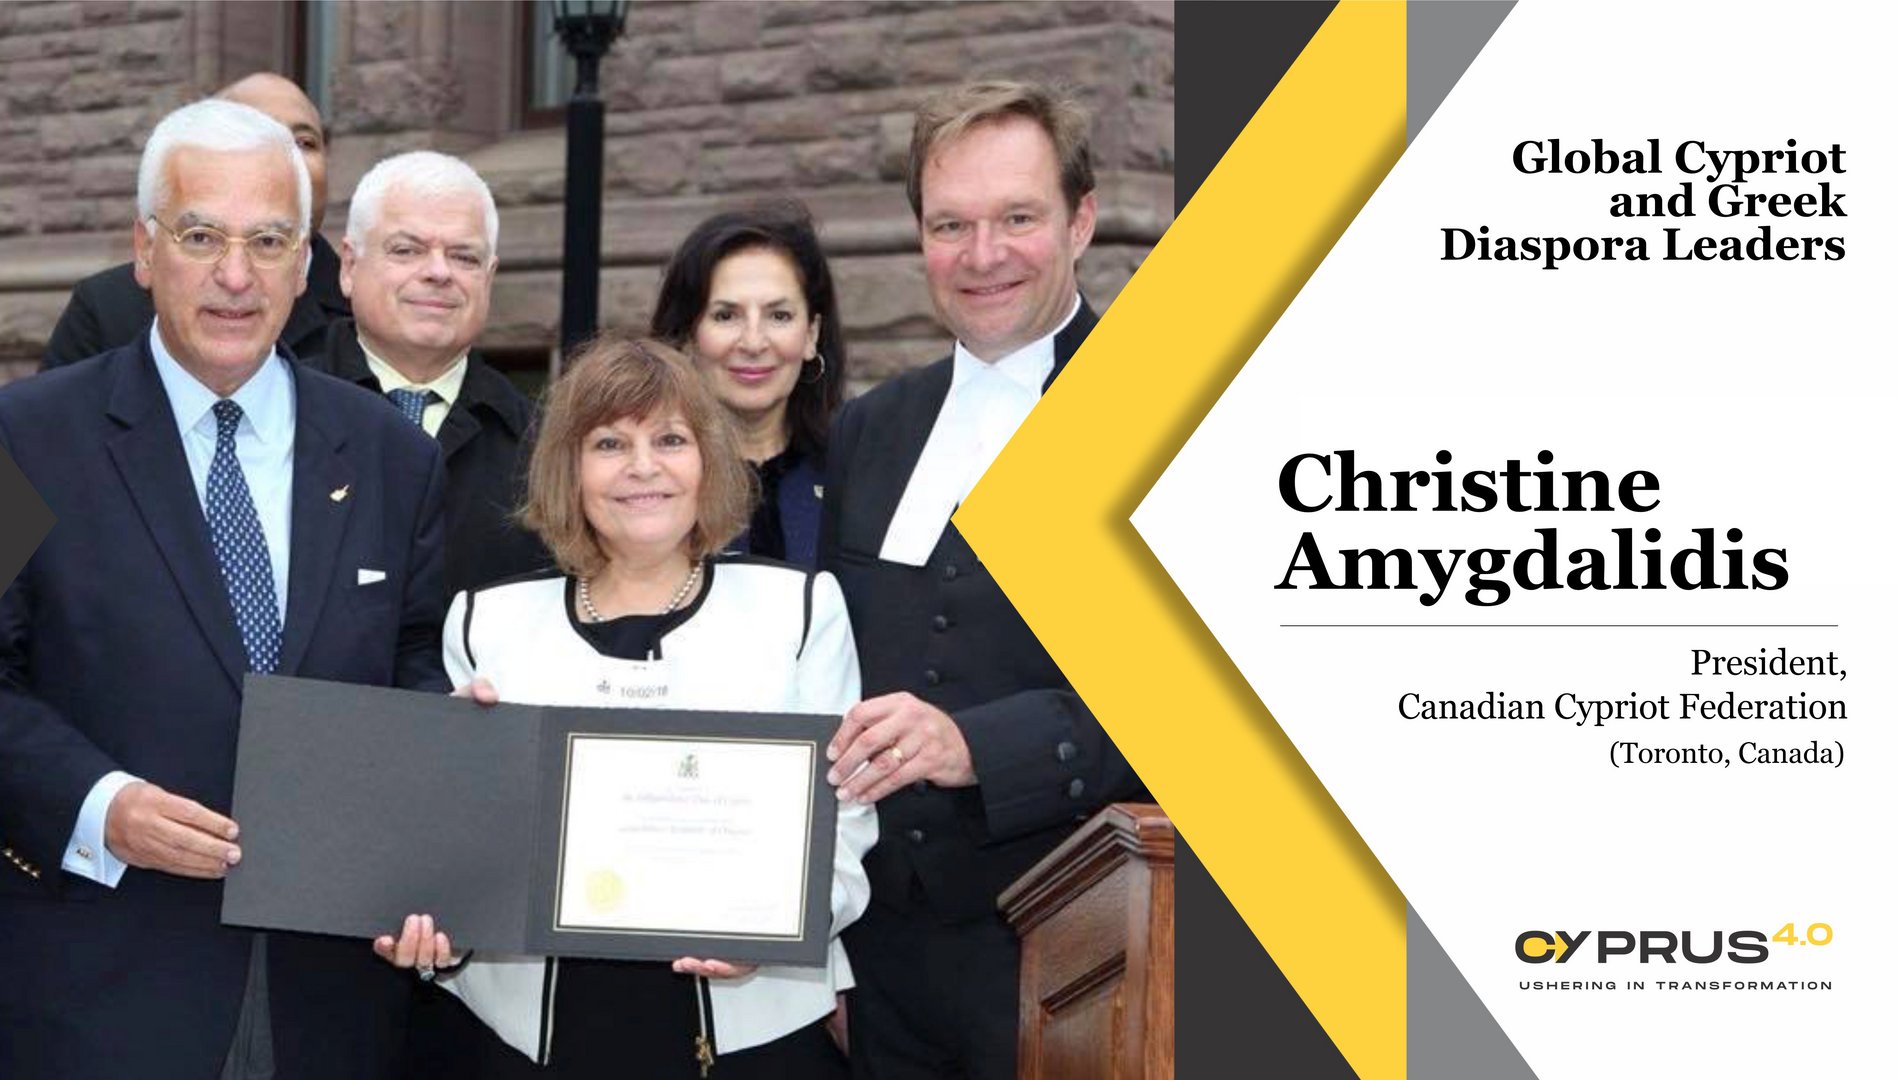 image Christine Amygdalidis: President, Canadian Cypriot Federation (Toronto, Canada)